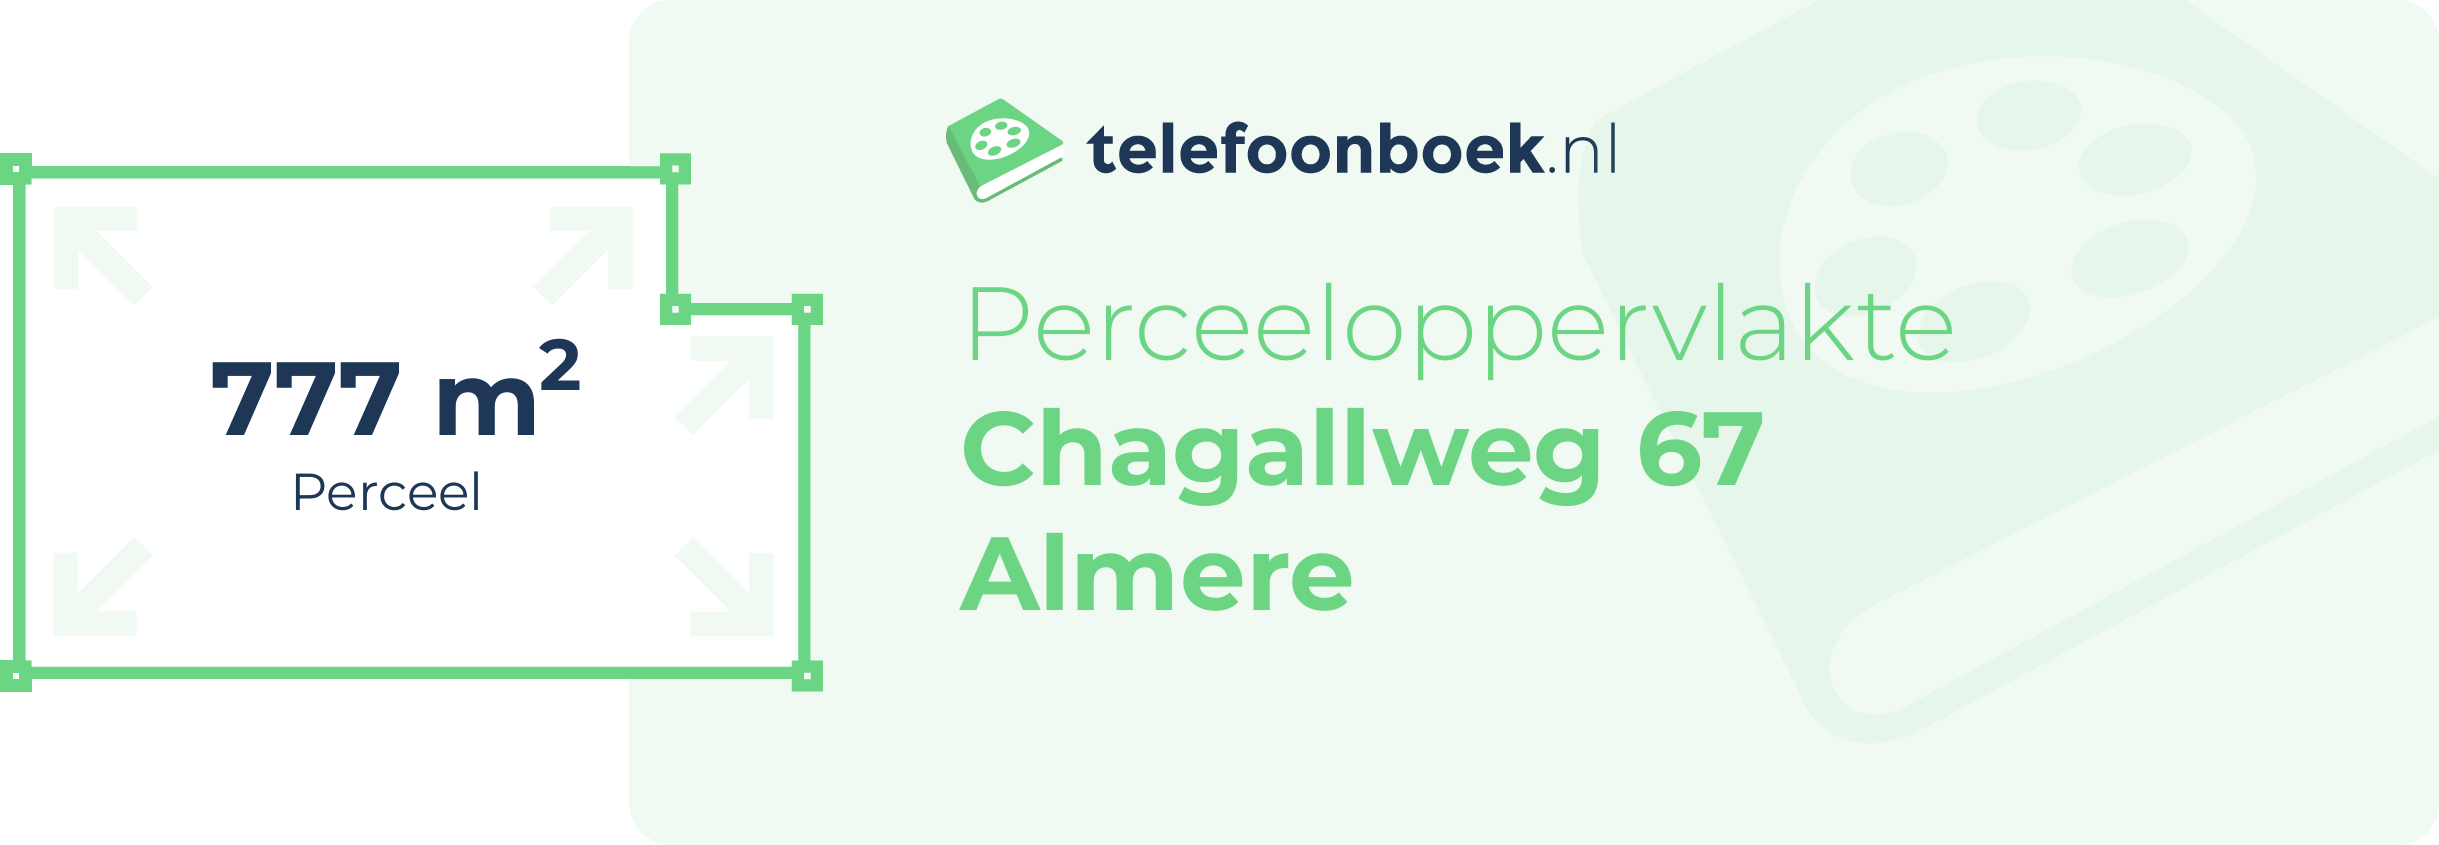 Perceeloppervlakte Chagallweg 67 Almere